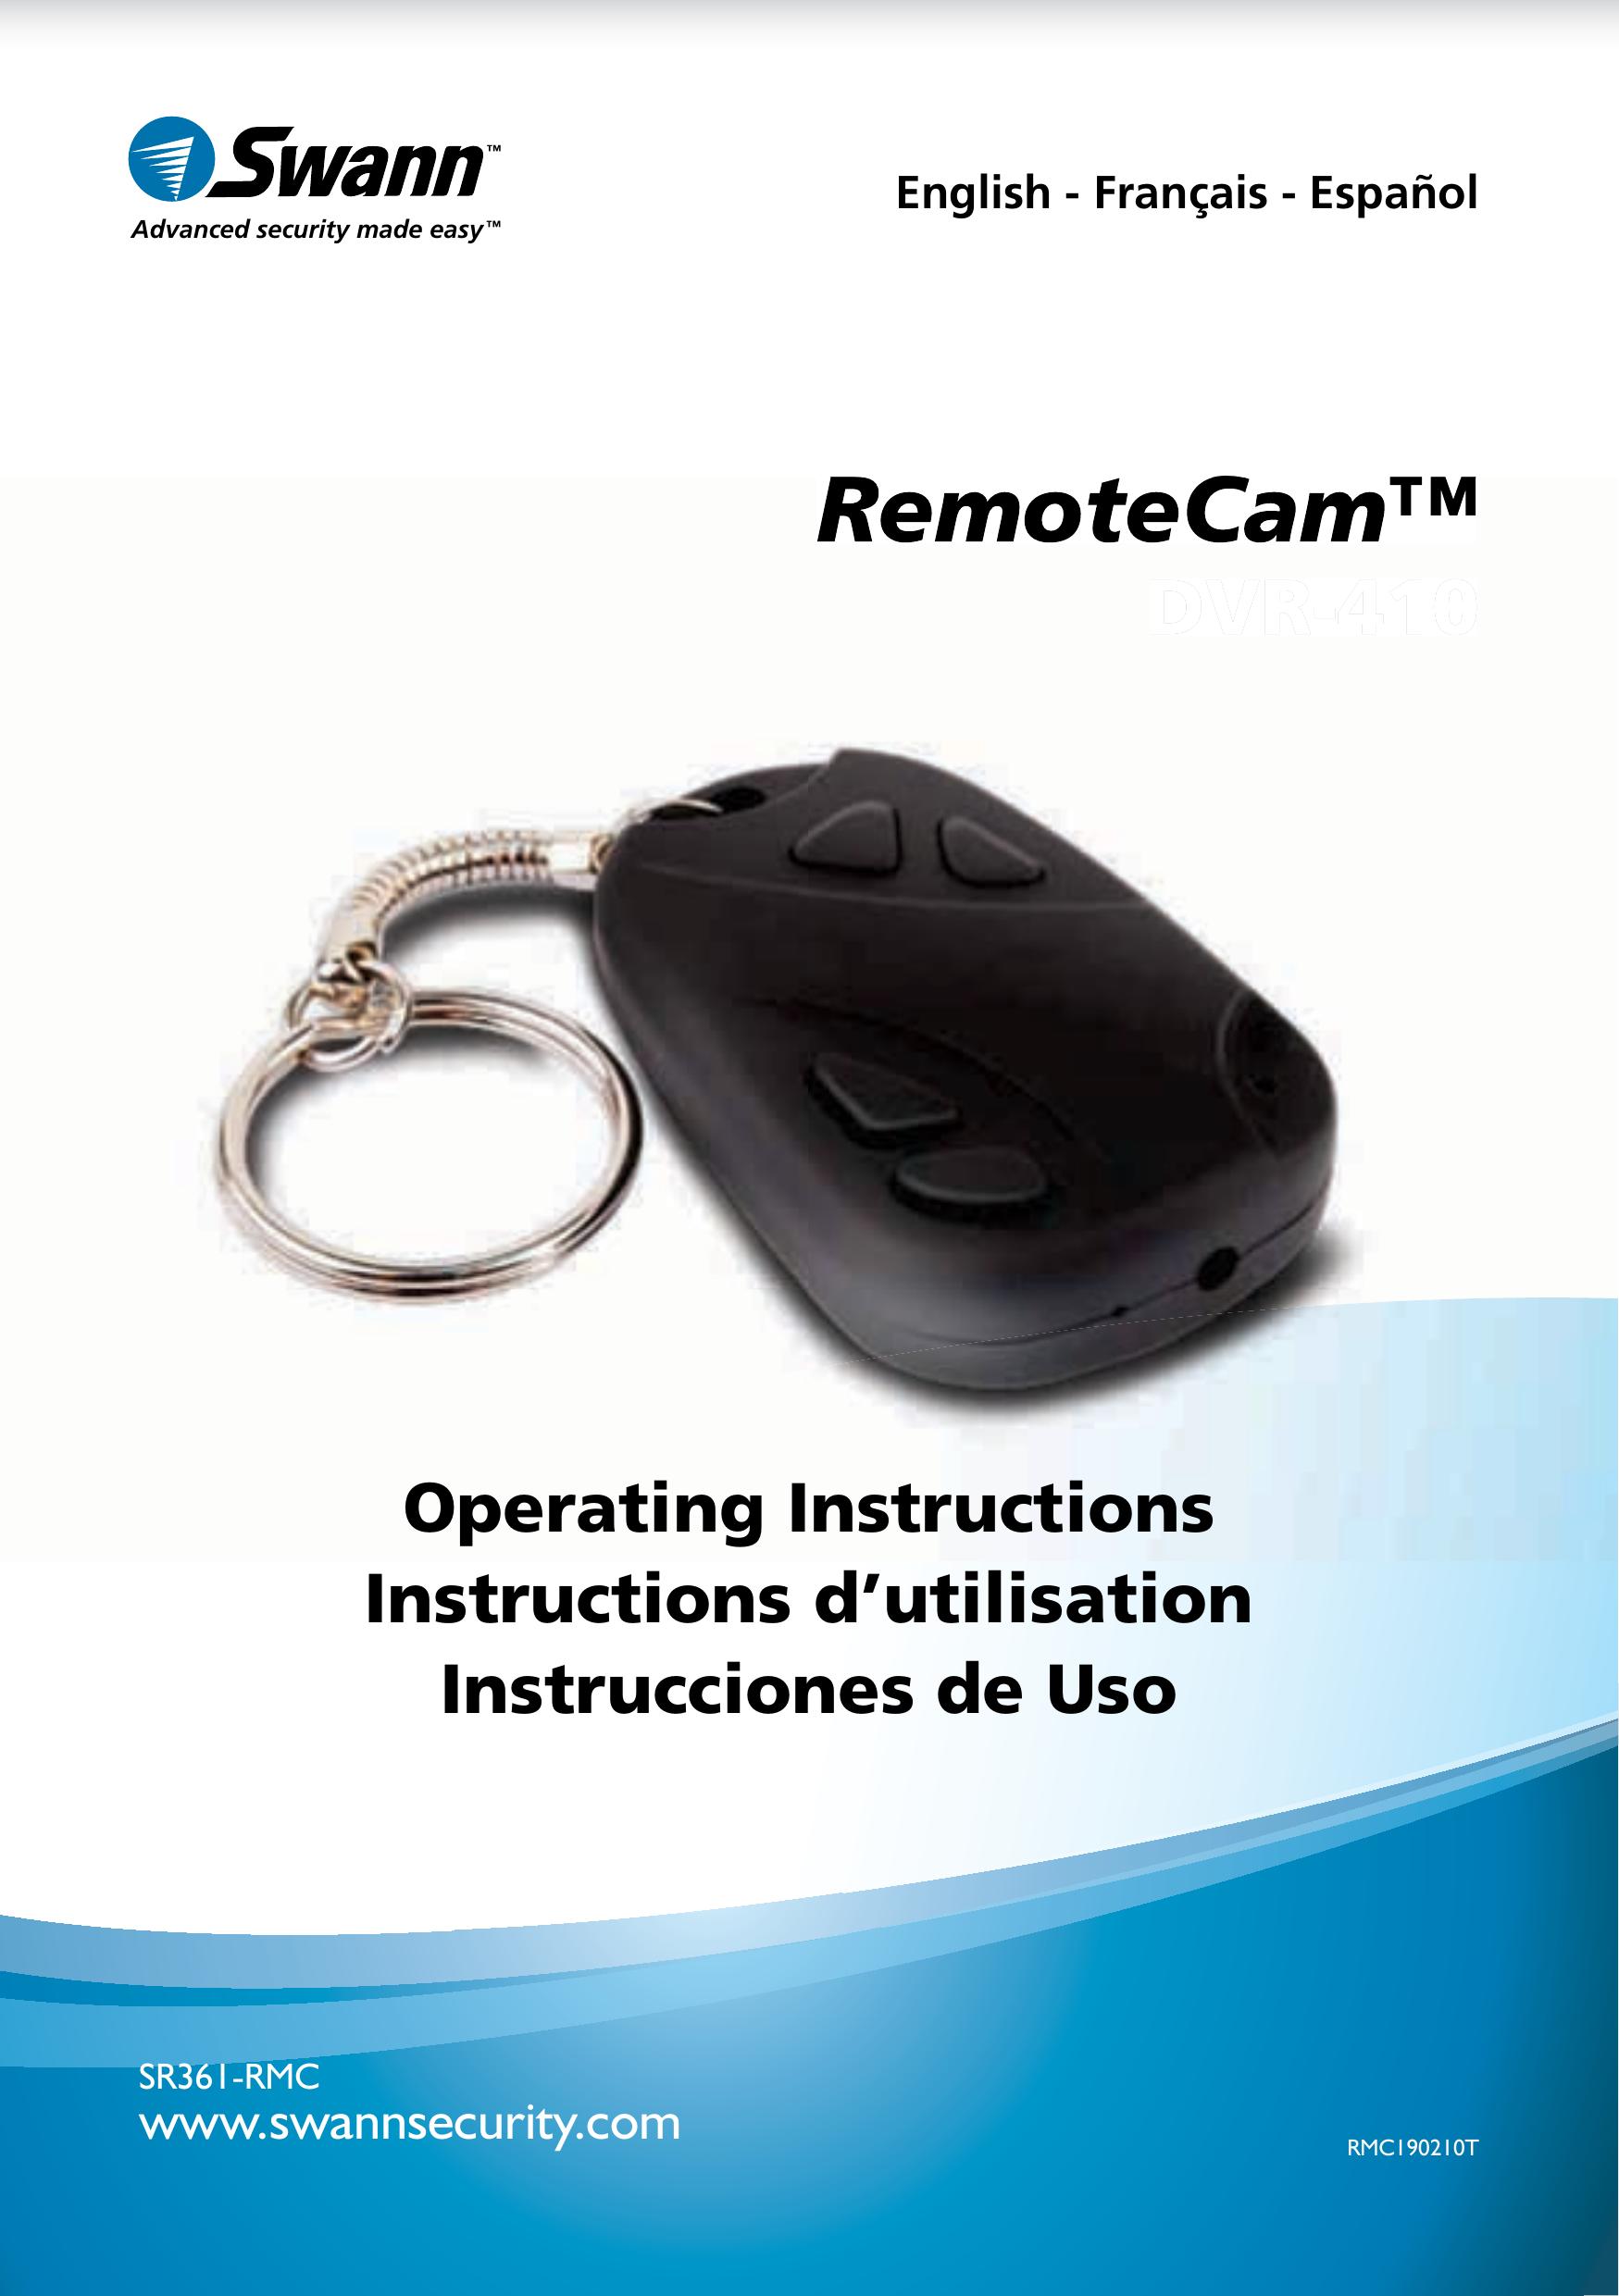 Swann RMC190210T Camera Accessories User Manual